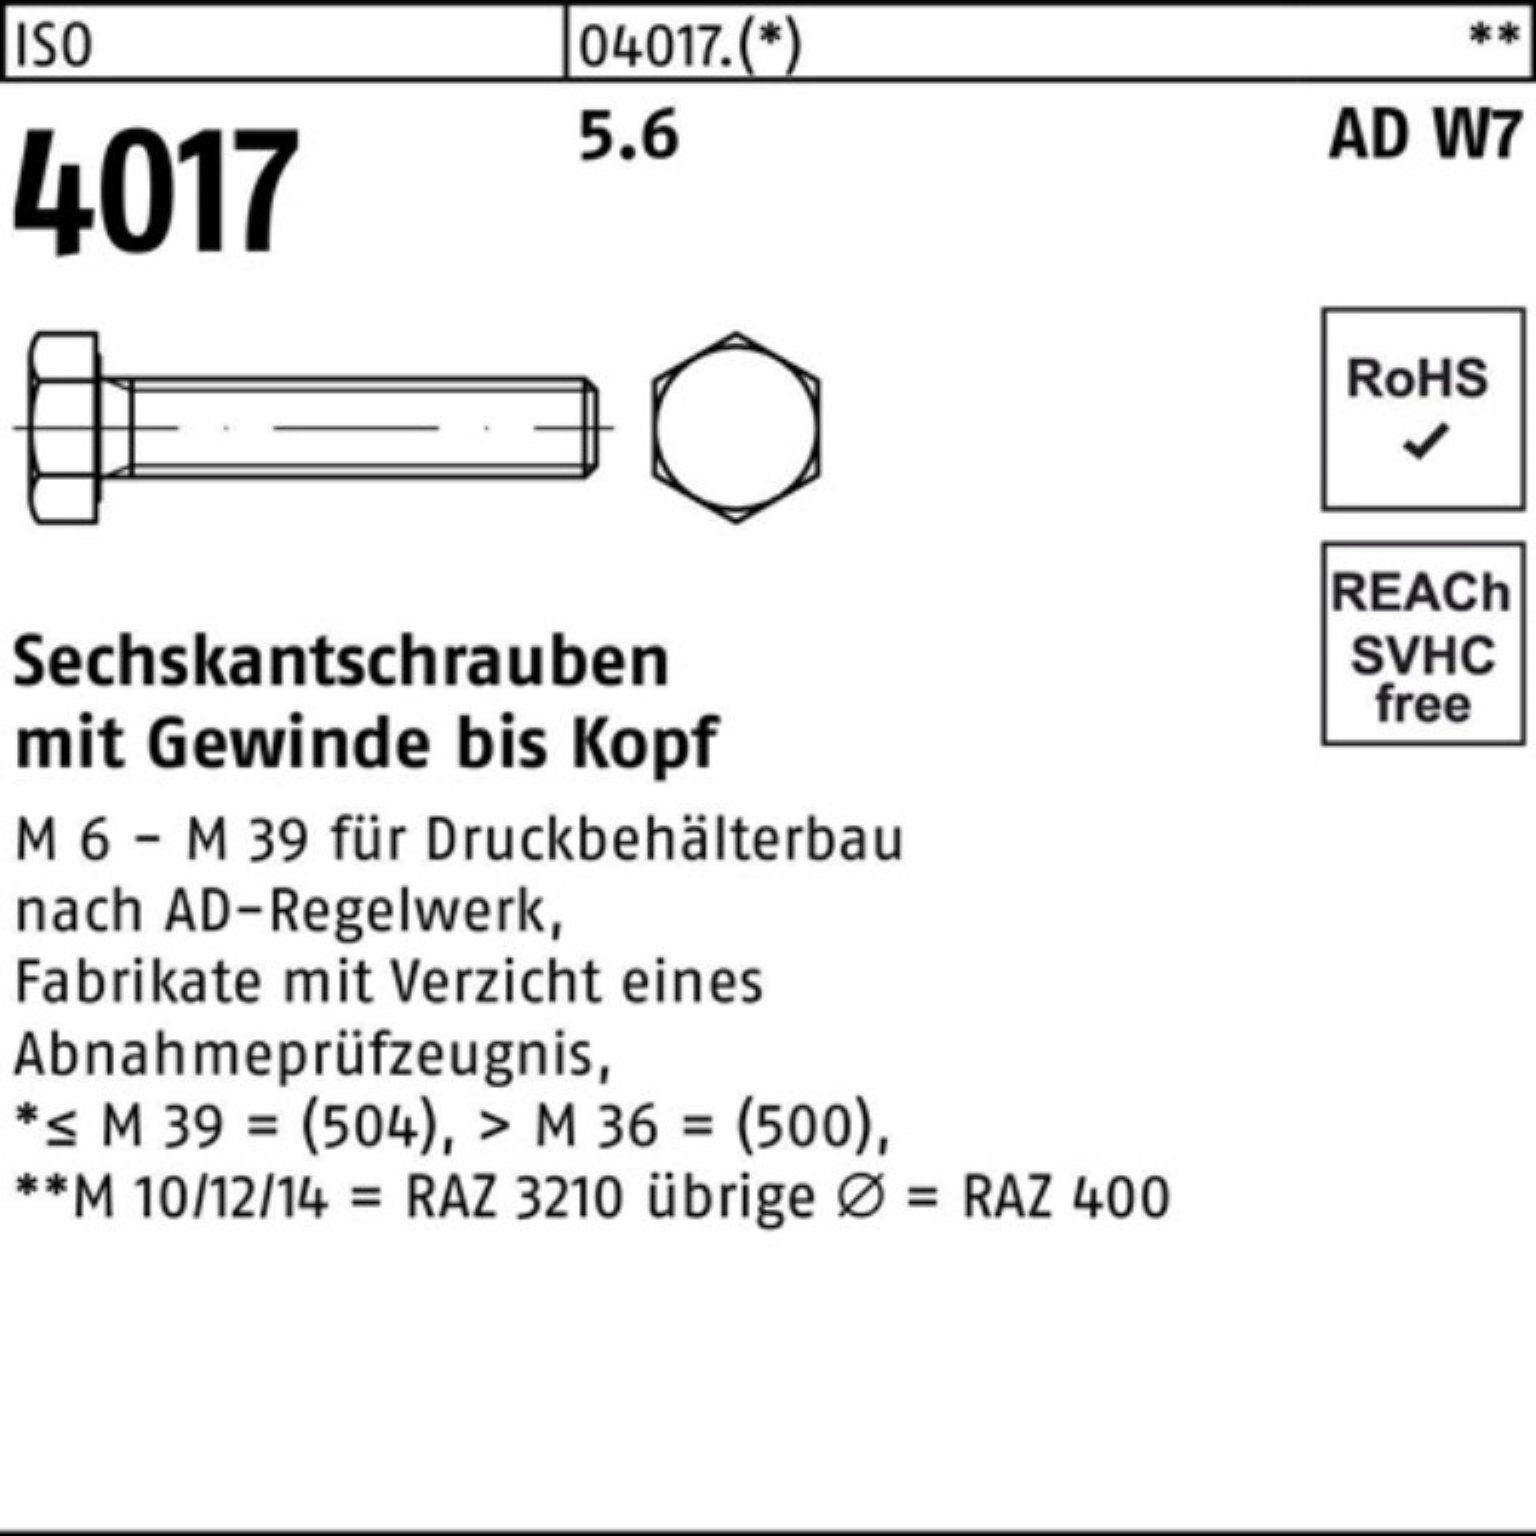 Stück 4017 Sechskantschraube ISO 50 AD Bufab Sechskantschraube M12x 100er VG I Pack 80 5.6 W7